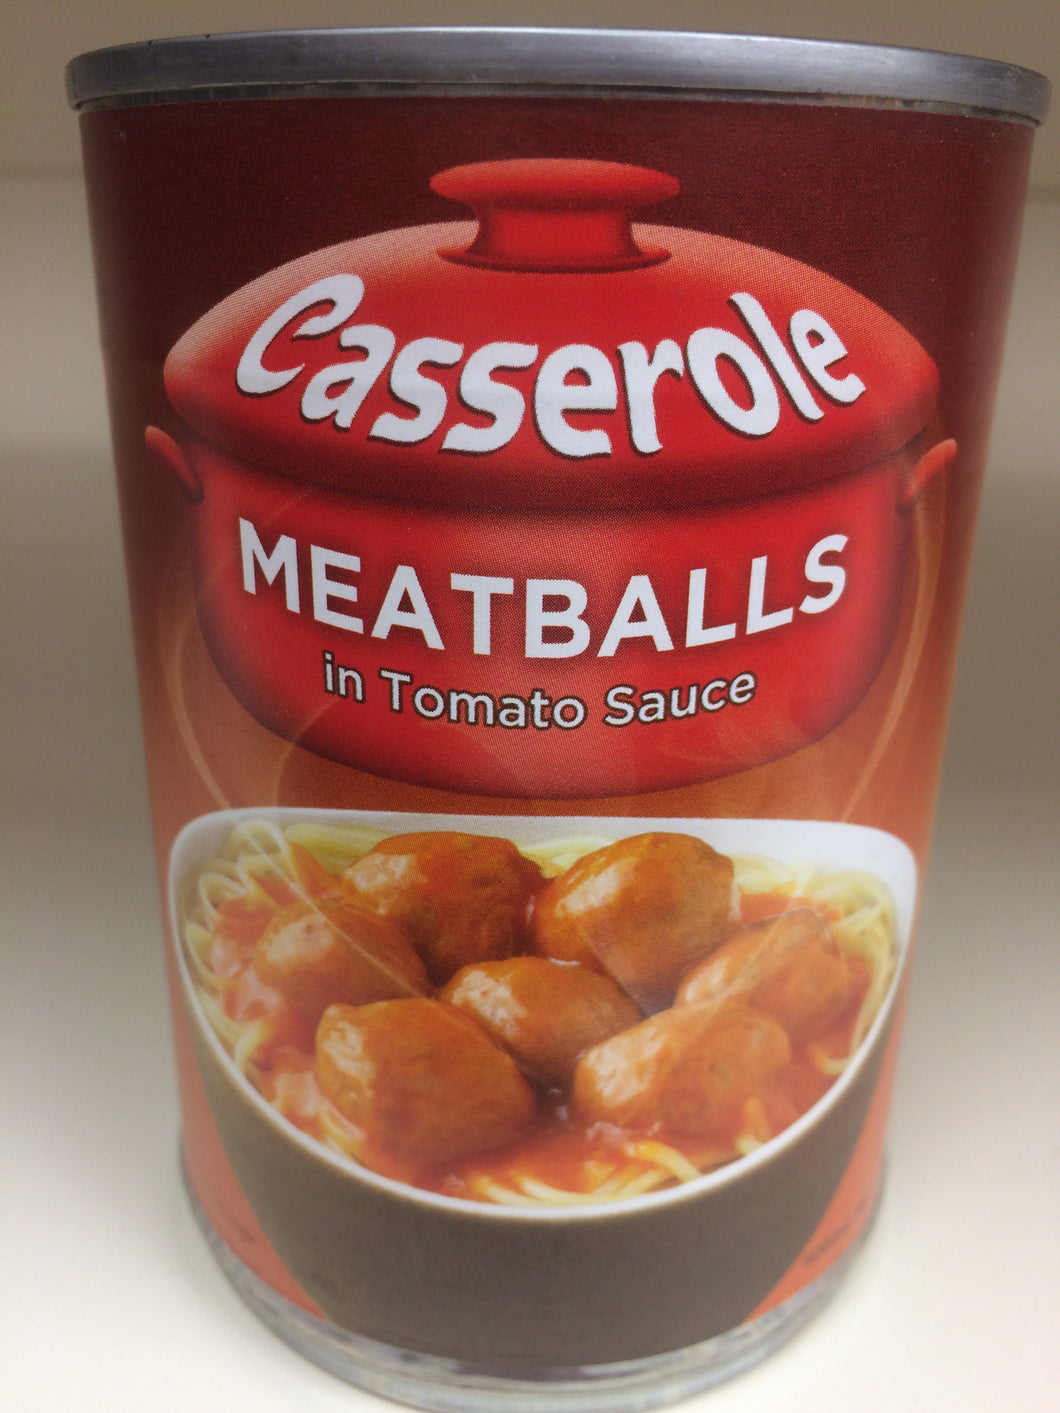 Casserole Chicken Meatballs in Tomato Sauce